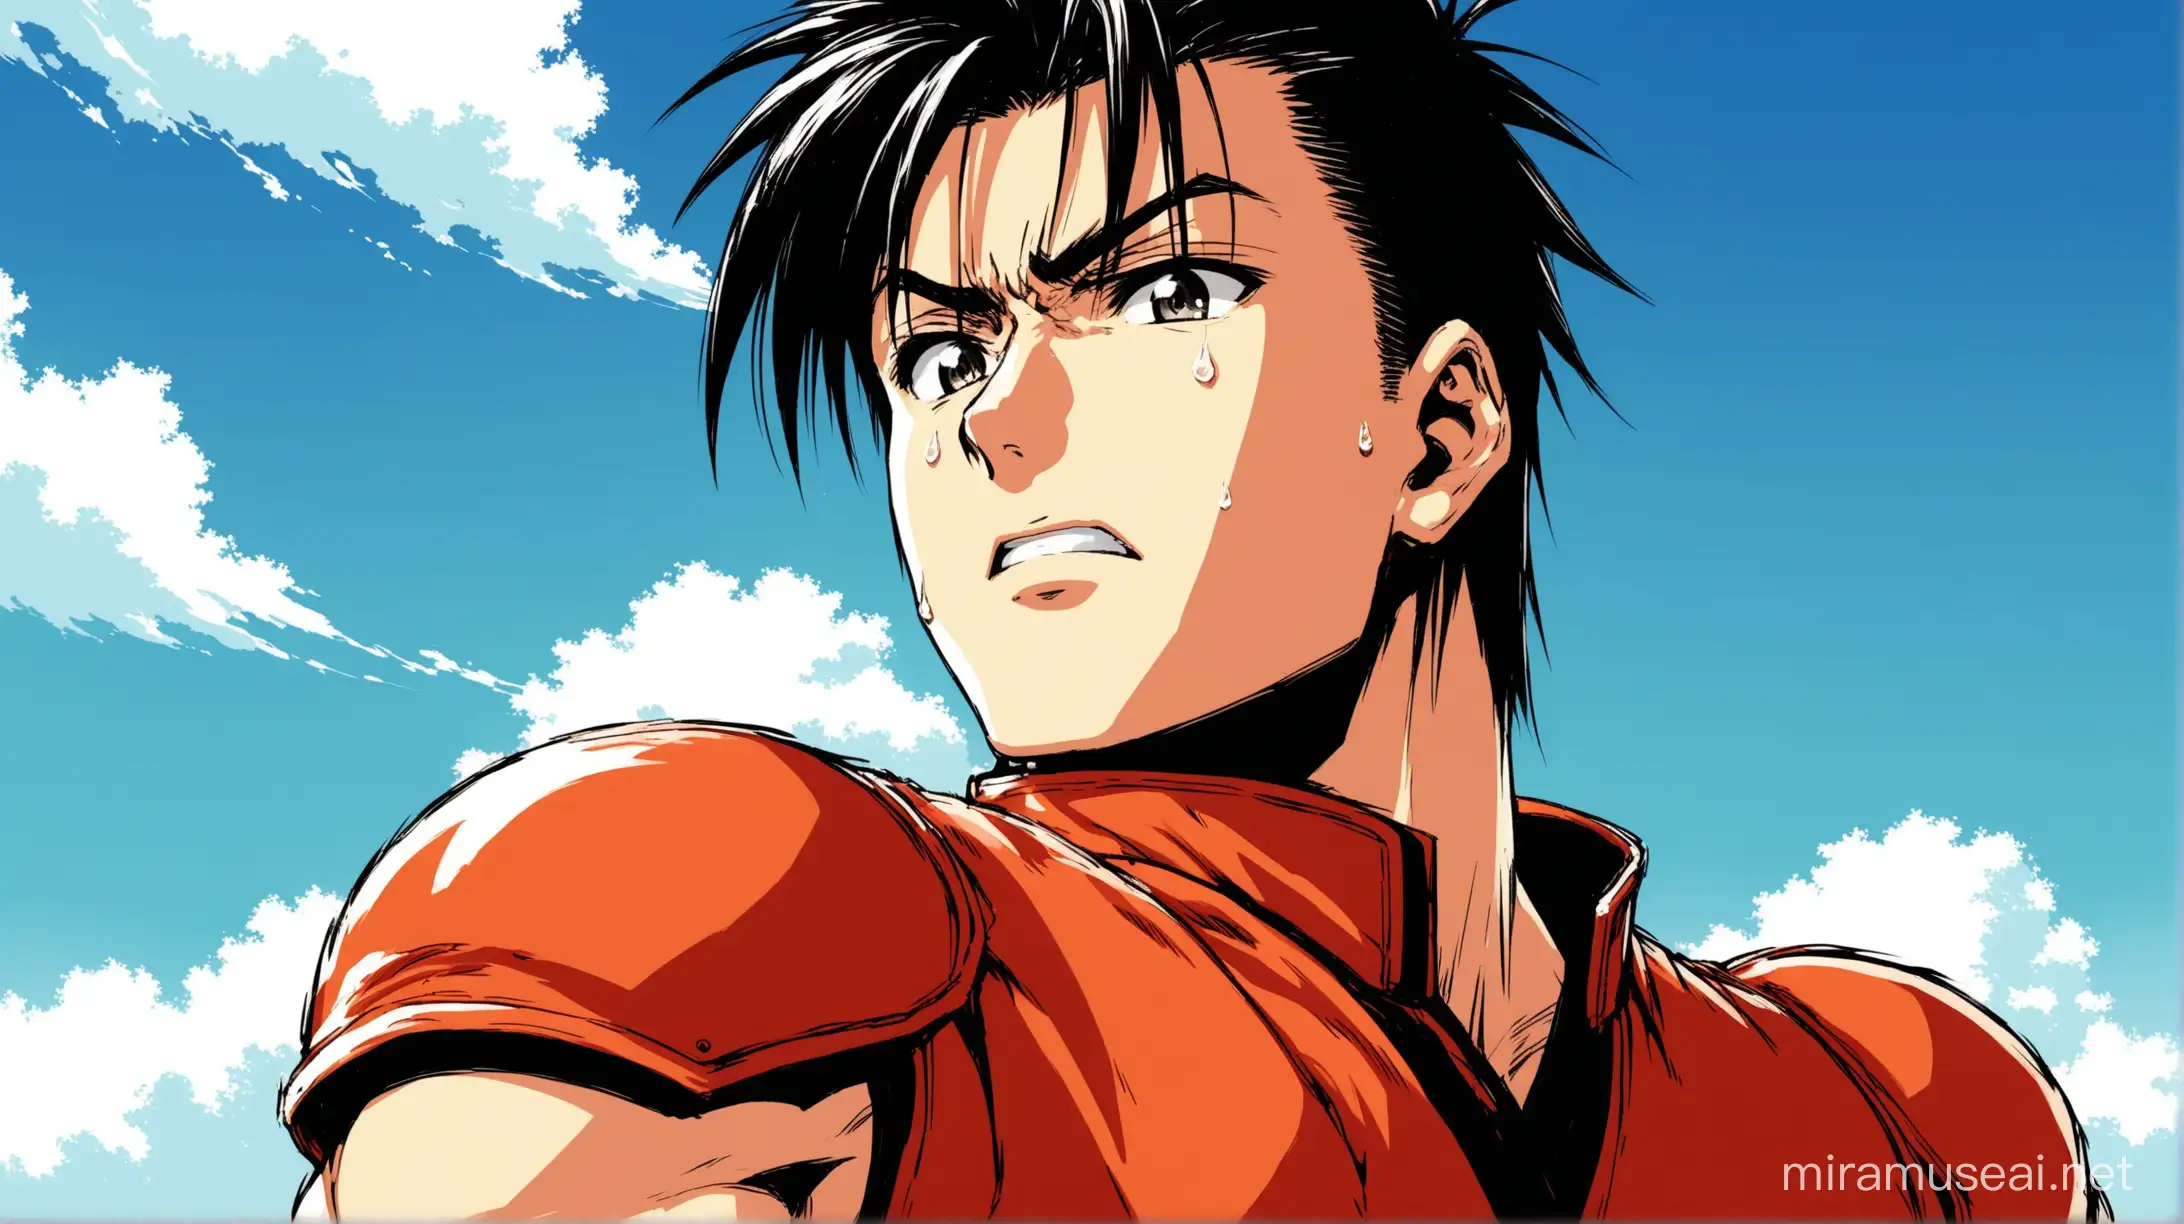 Akira from Virtua Fighter Gazing Skyward with Tears Manga Style Art